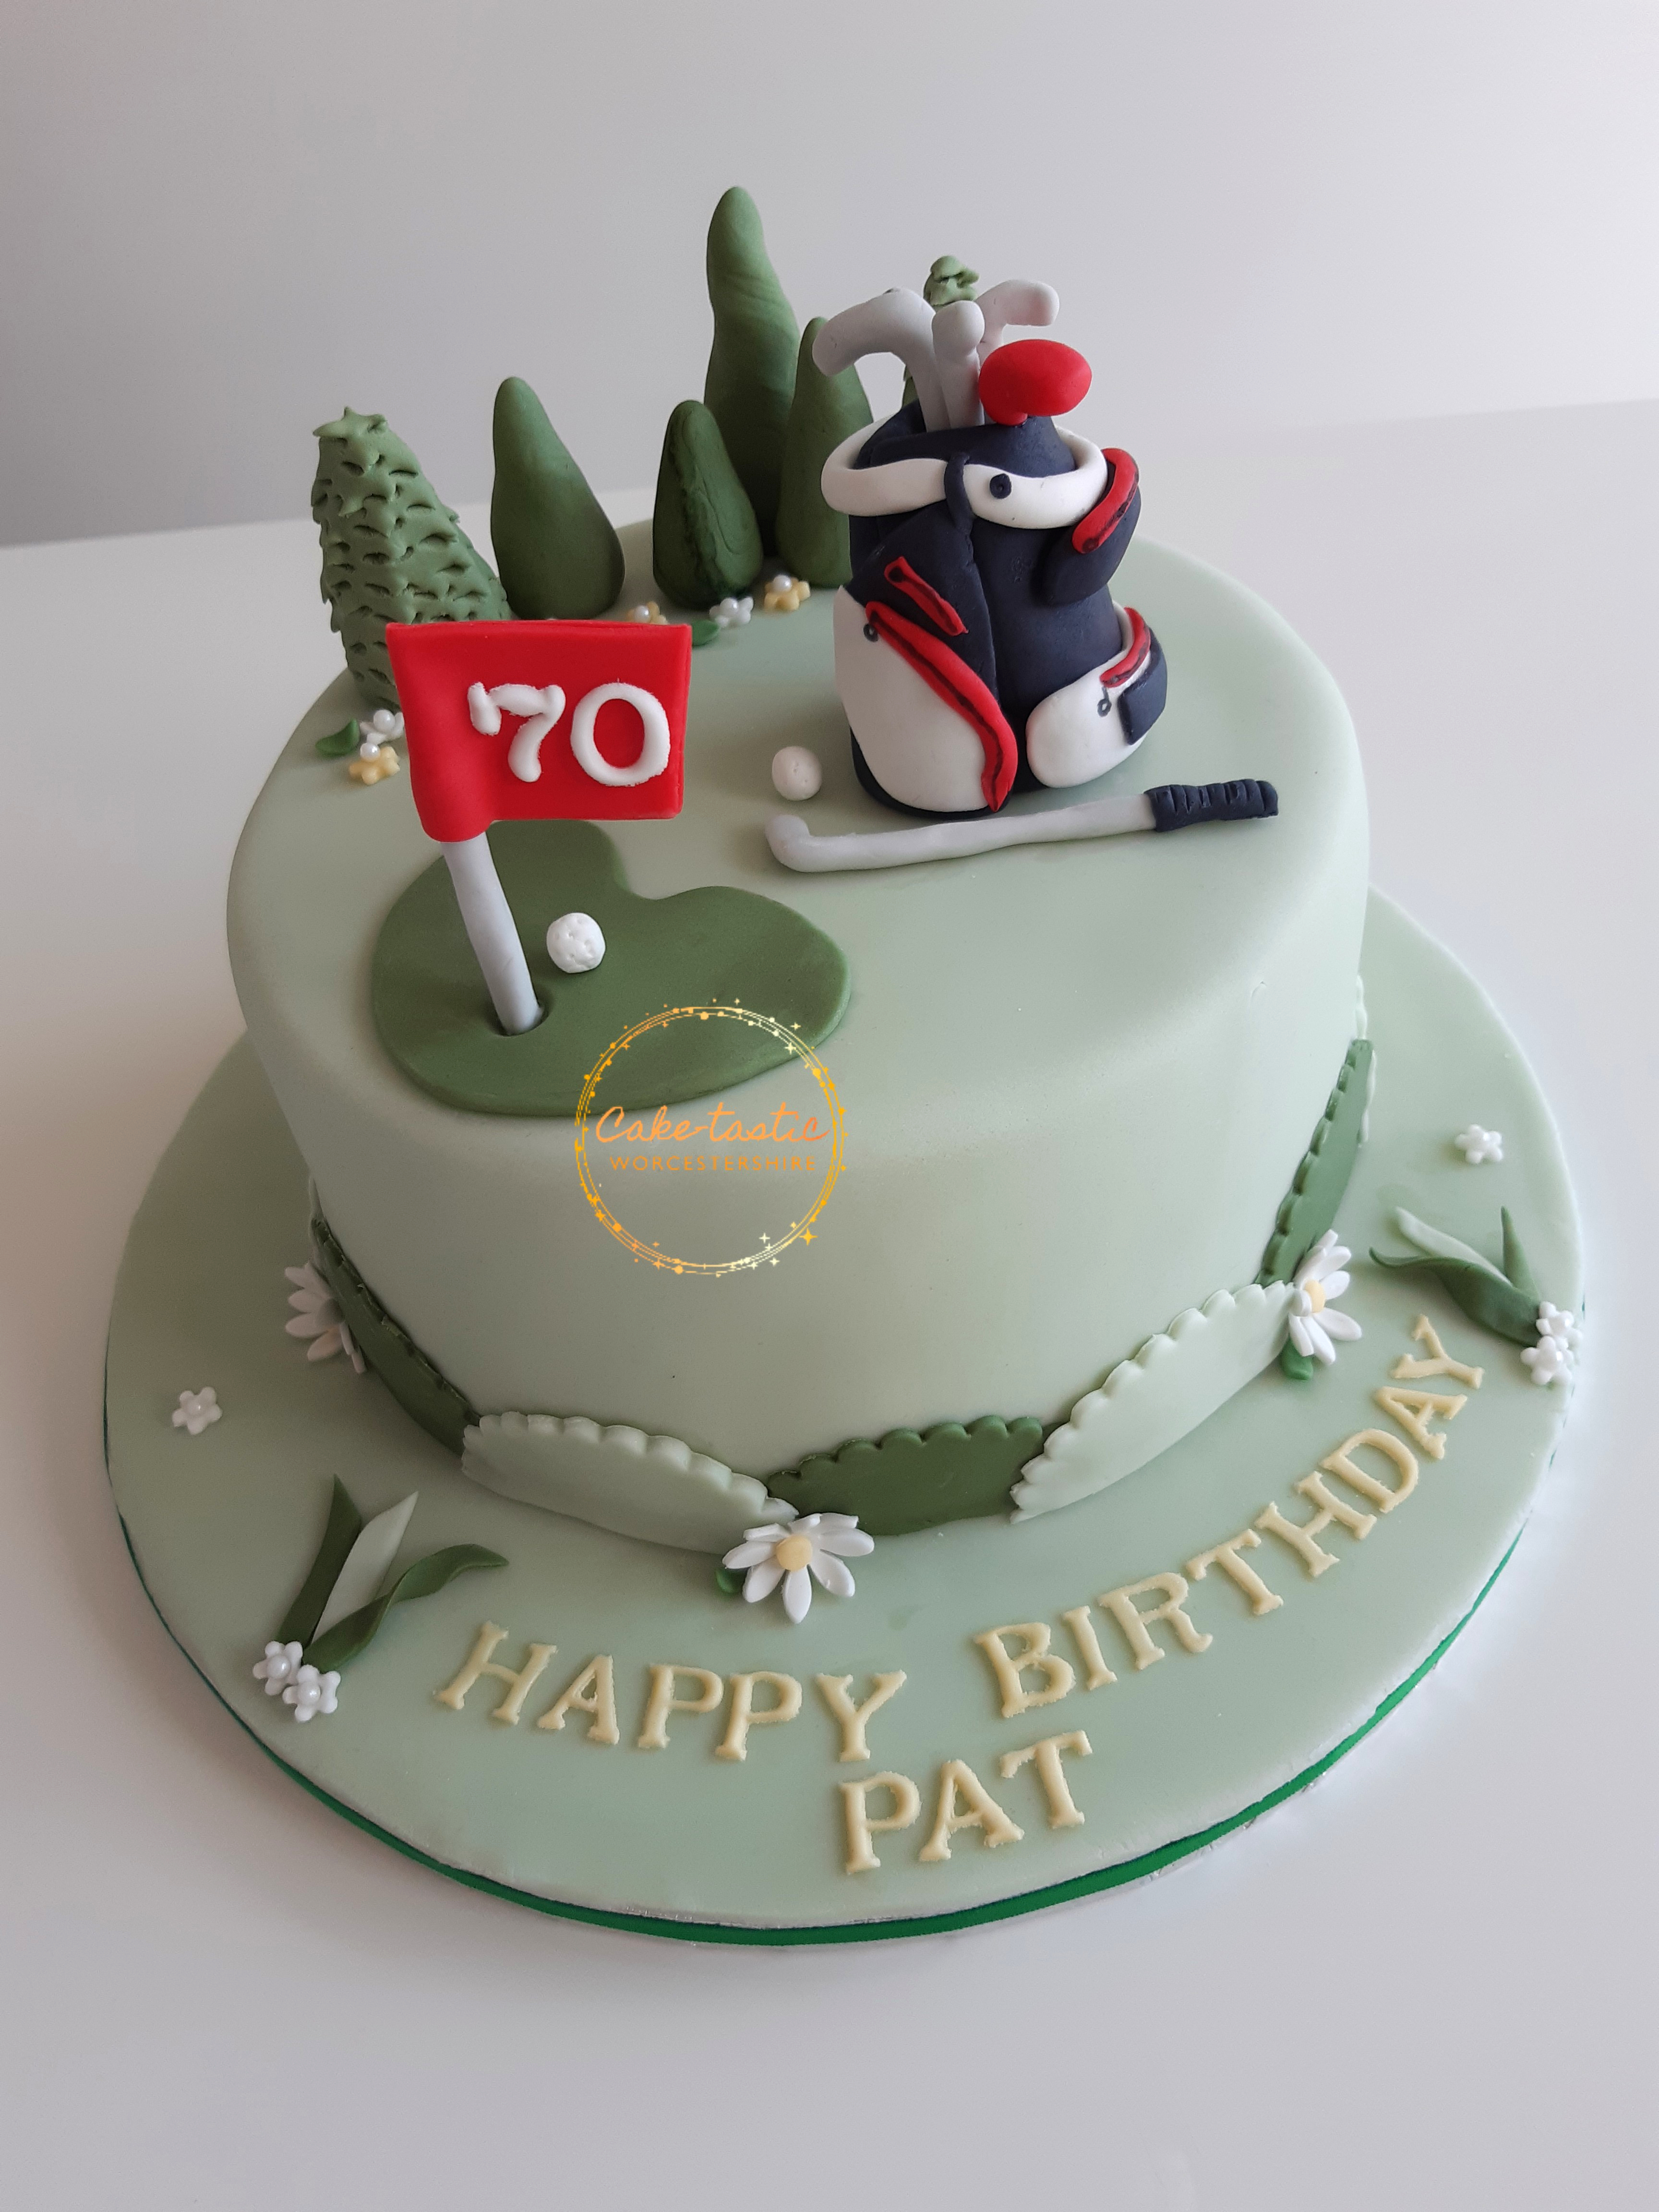 Golf Cake - 70th Birthday